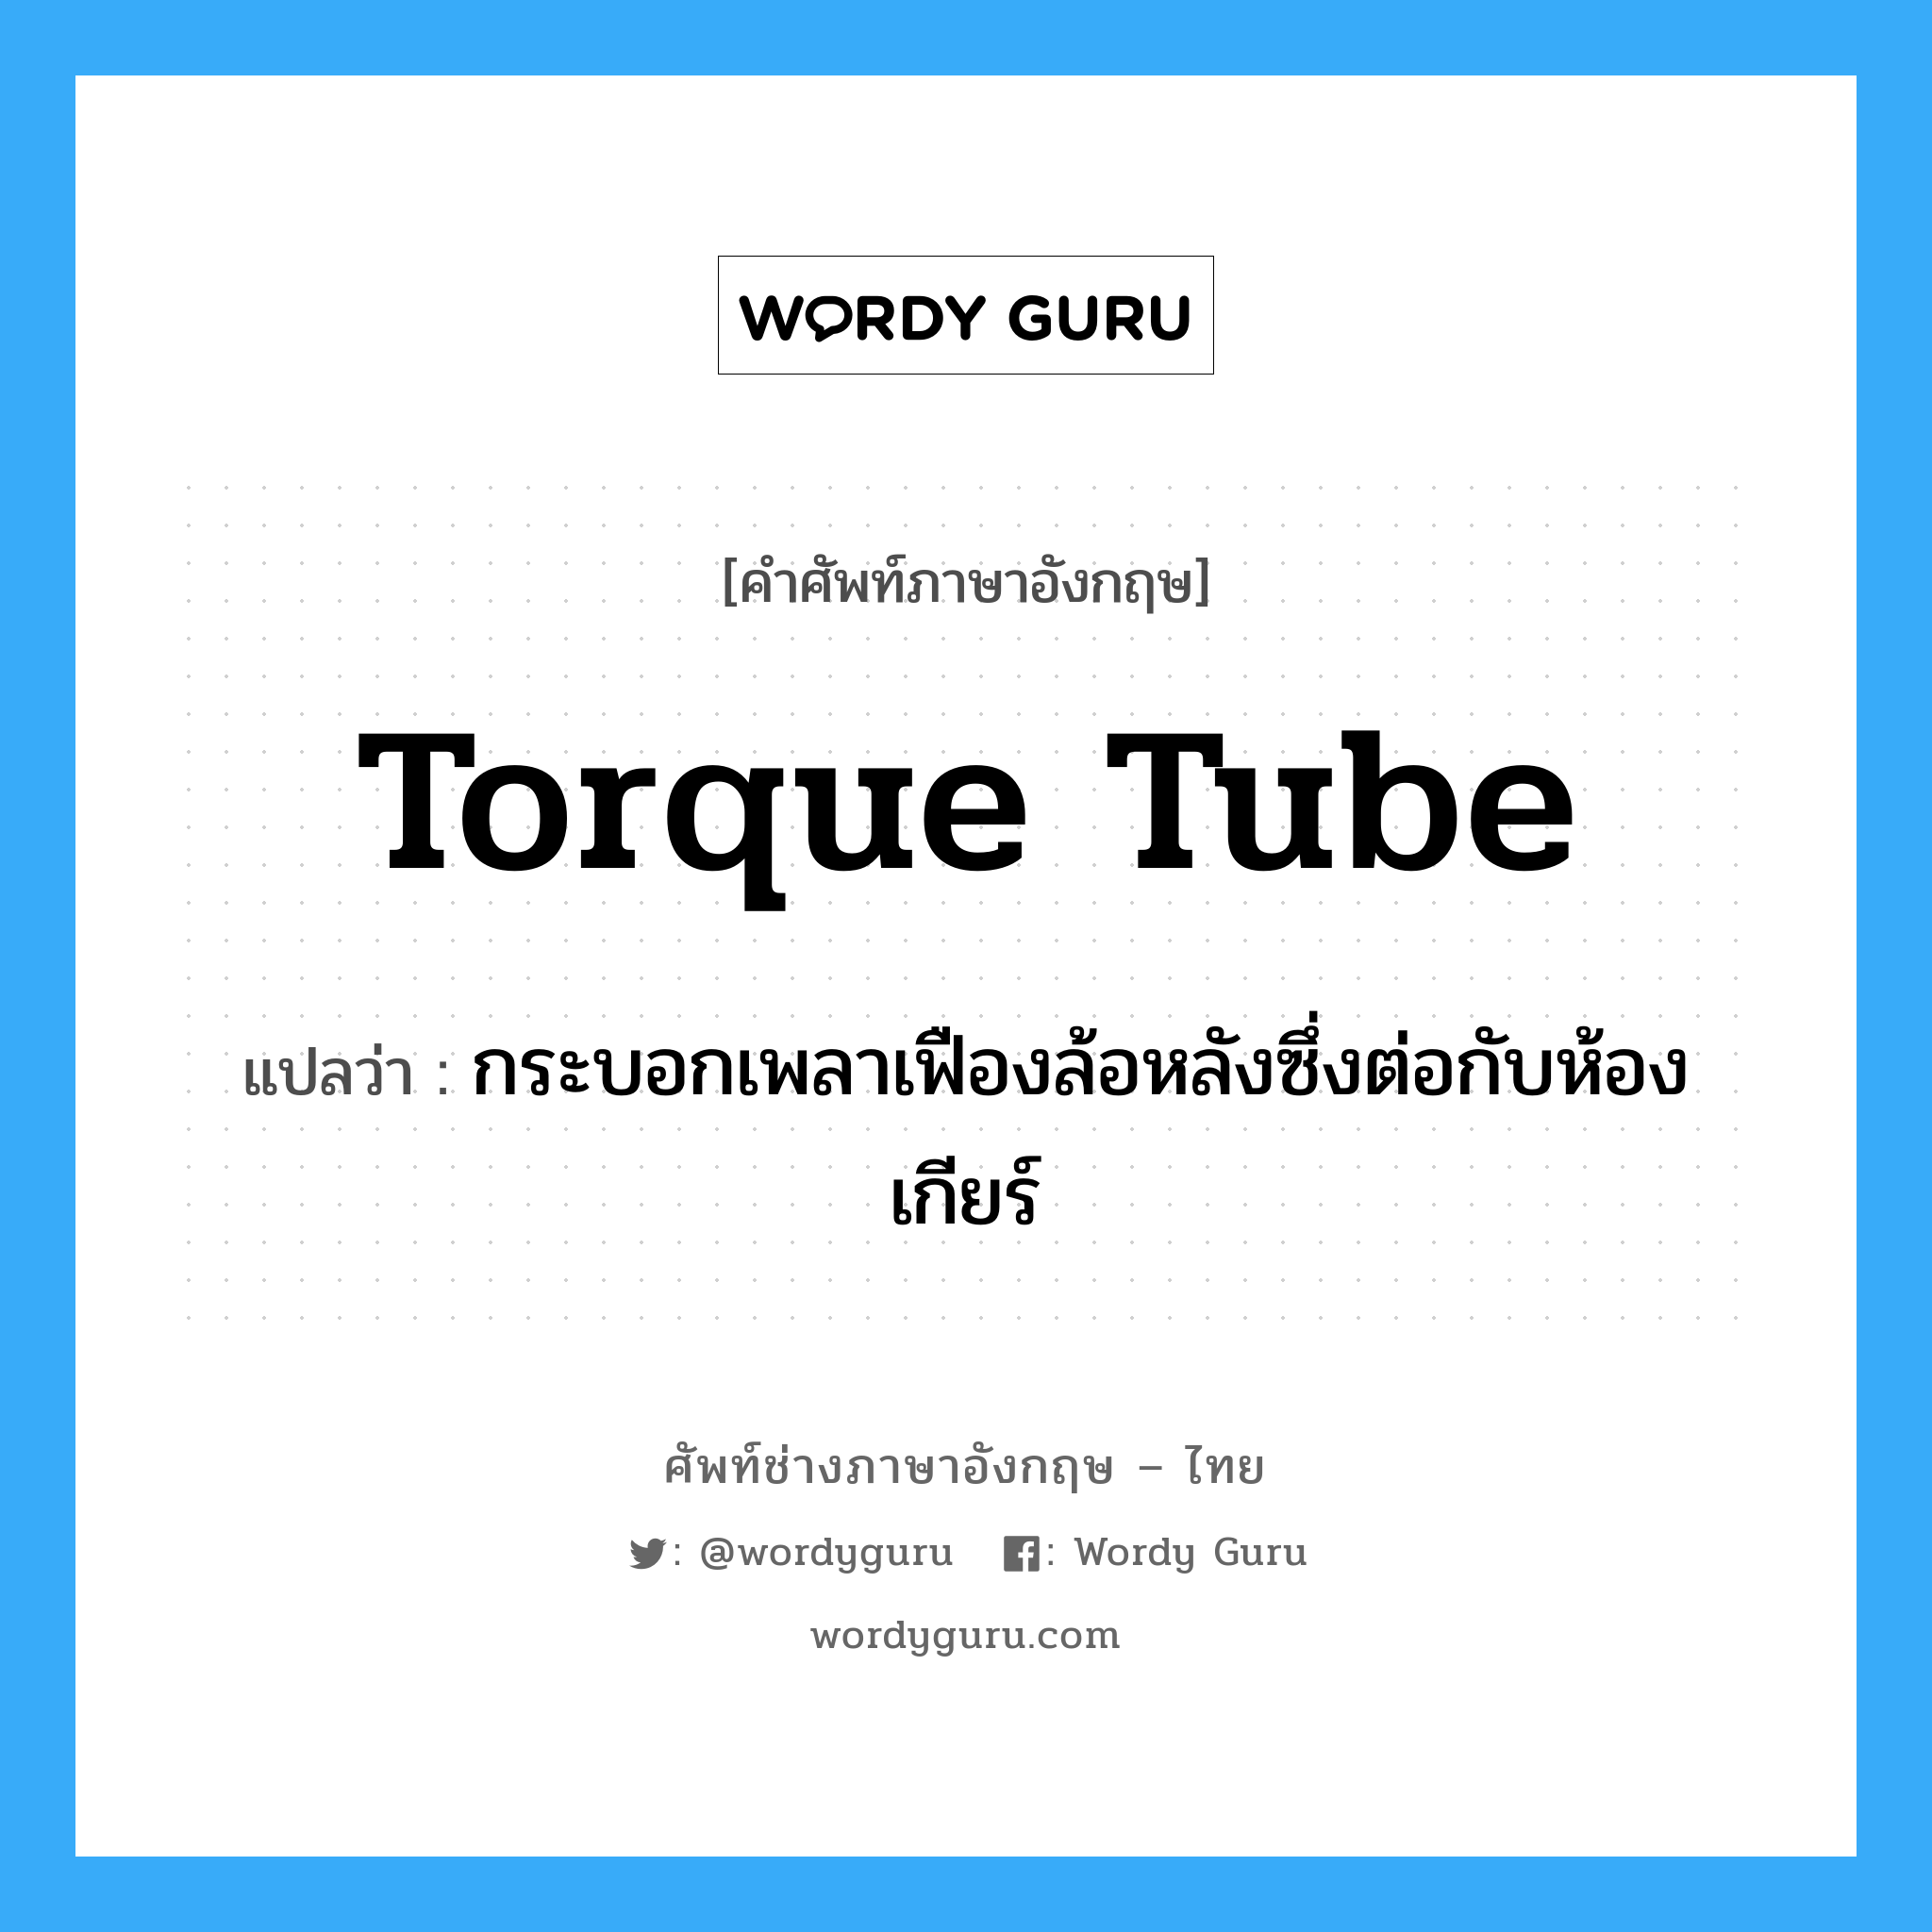 torque tube แปลว่า?, คำศัพท์ช่างภาษาอังกฤษ - ไทย torque tube คำศัพท์ภาษาอังกฤษ torque tube แปลว่า กระบอกเพลาเฟืองล้อหลังซึ่งต่อกับห้องเกียร์